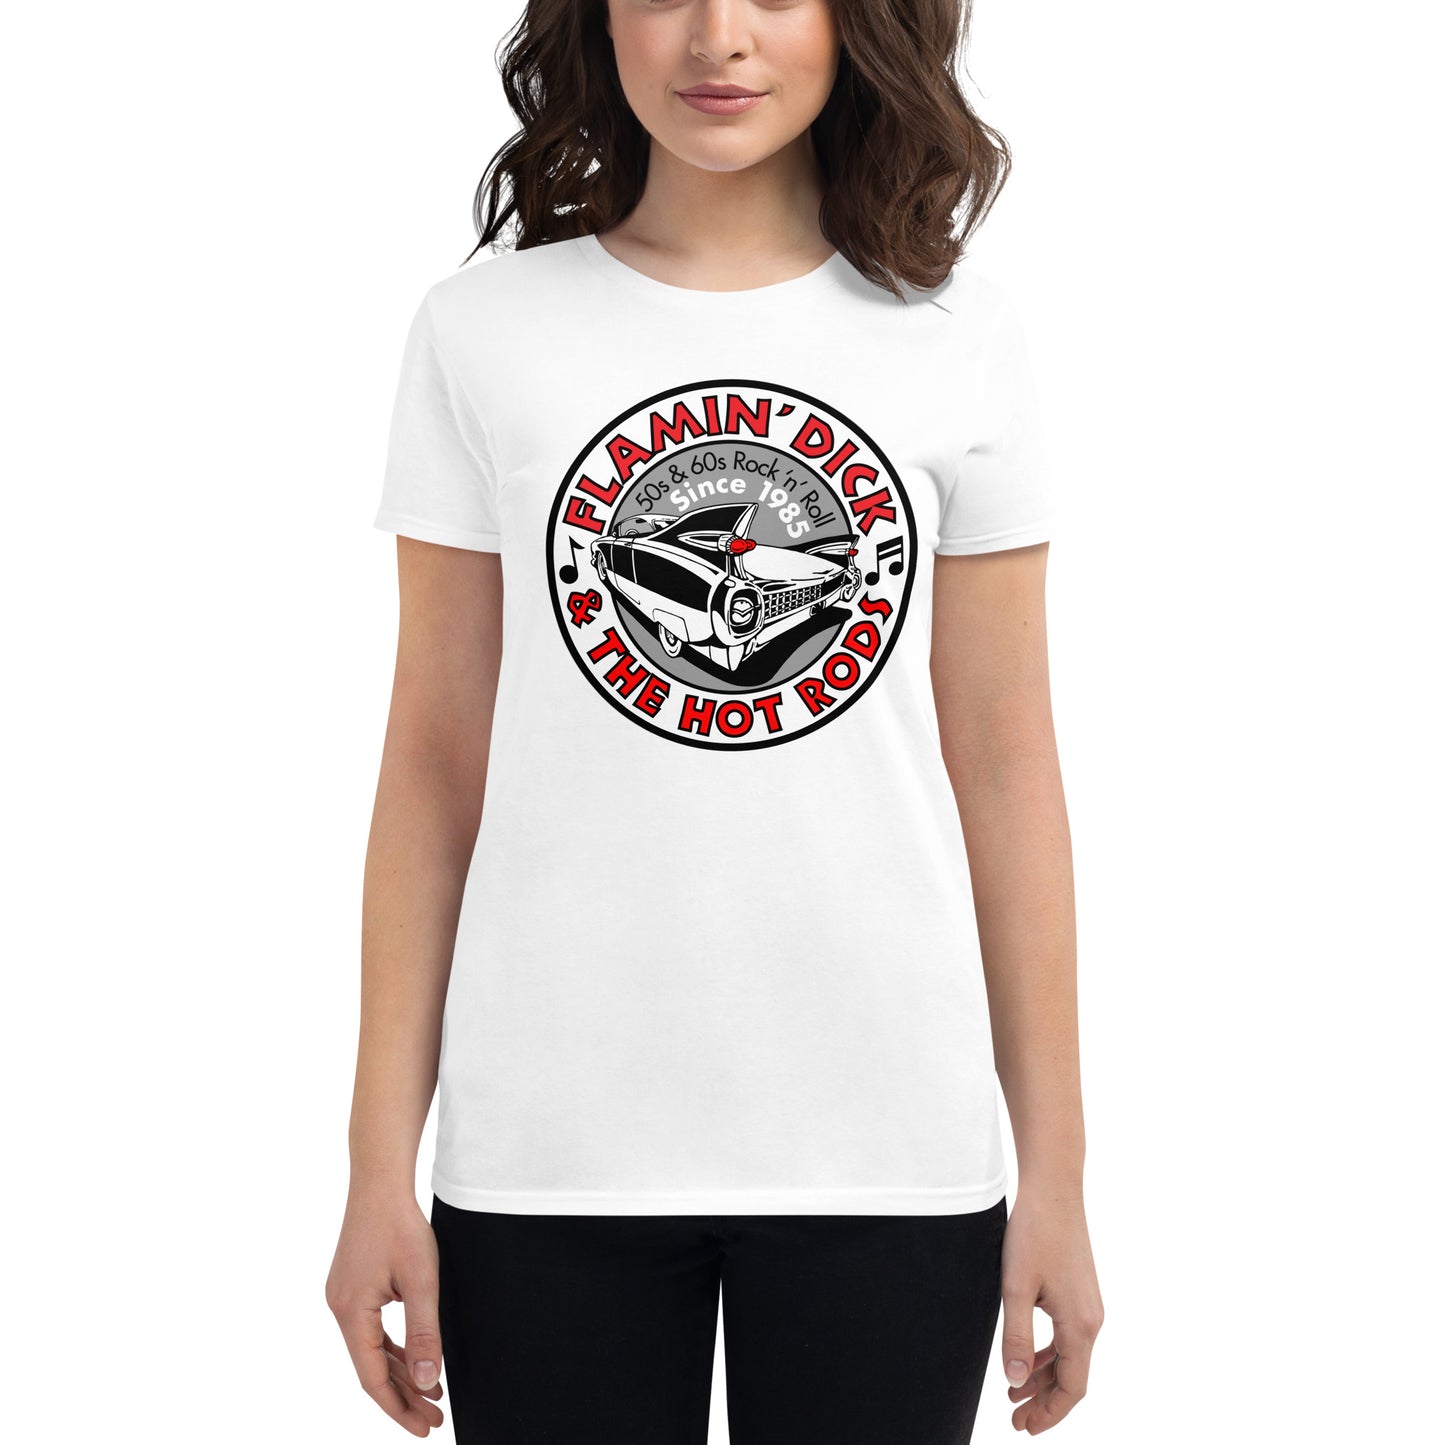 FDHR Women's Fashion Fit T-Shirt - FREE SHIPPING!